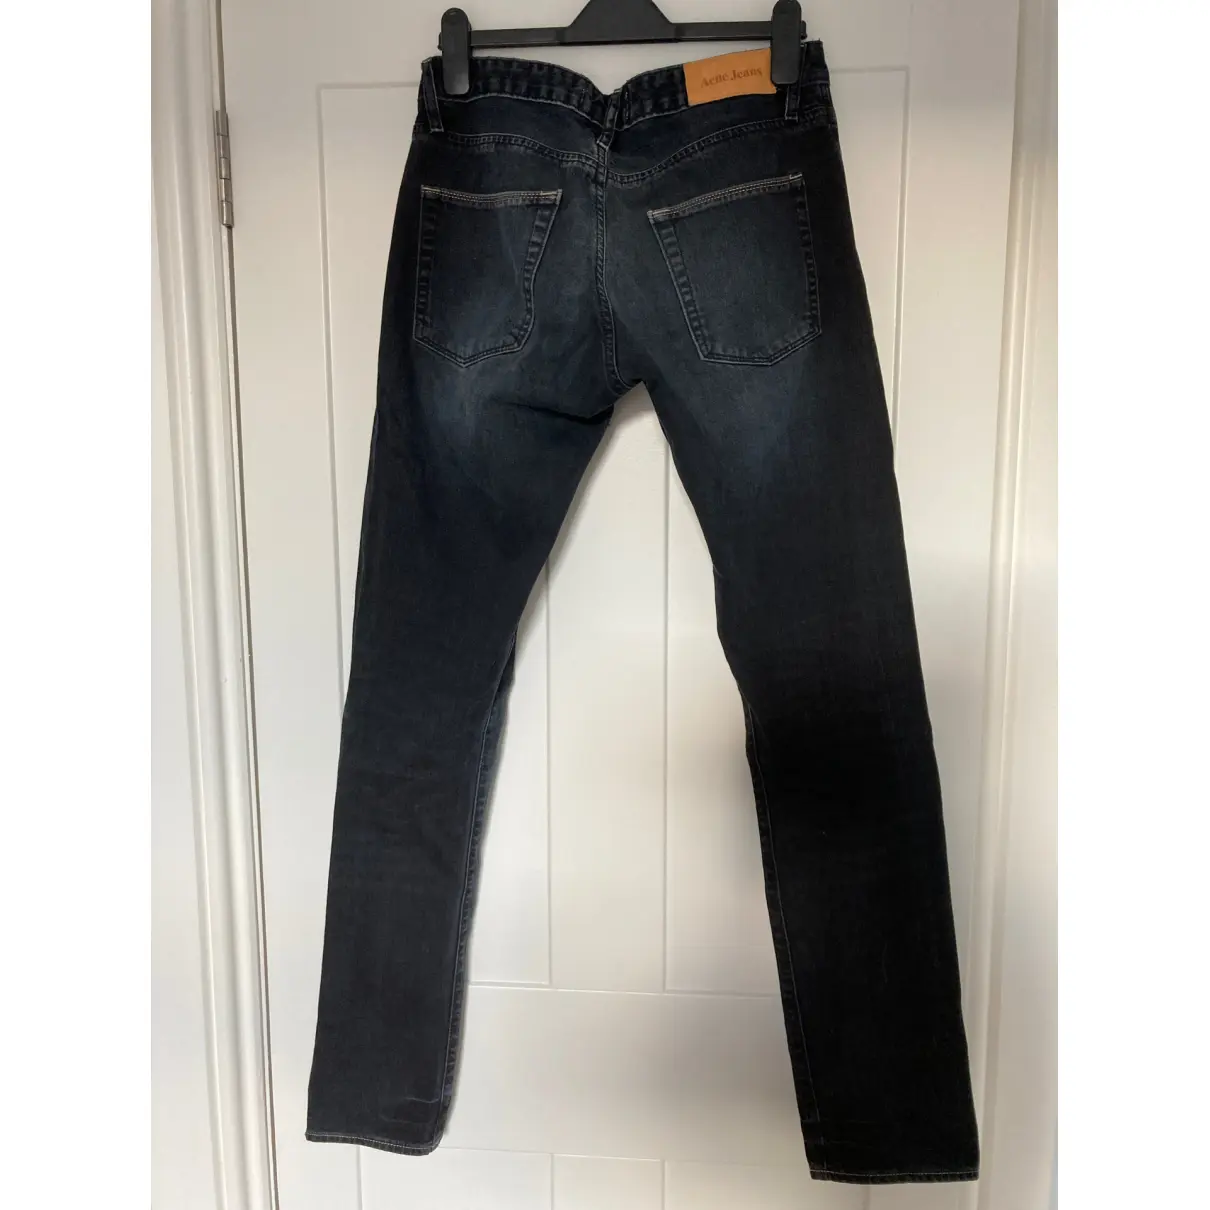 Buy Acne Studios Boyfriend jeans online - Vintage